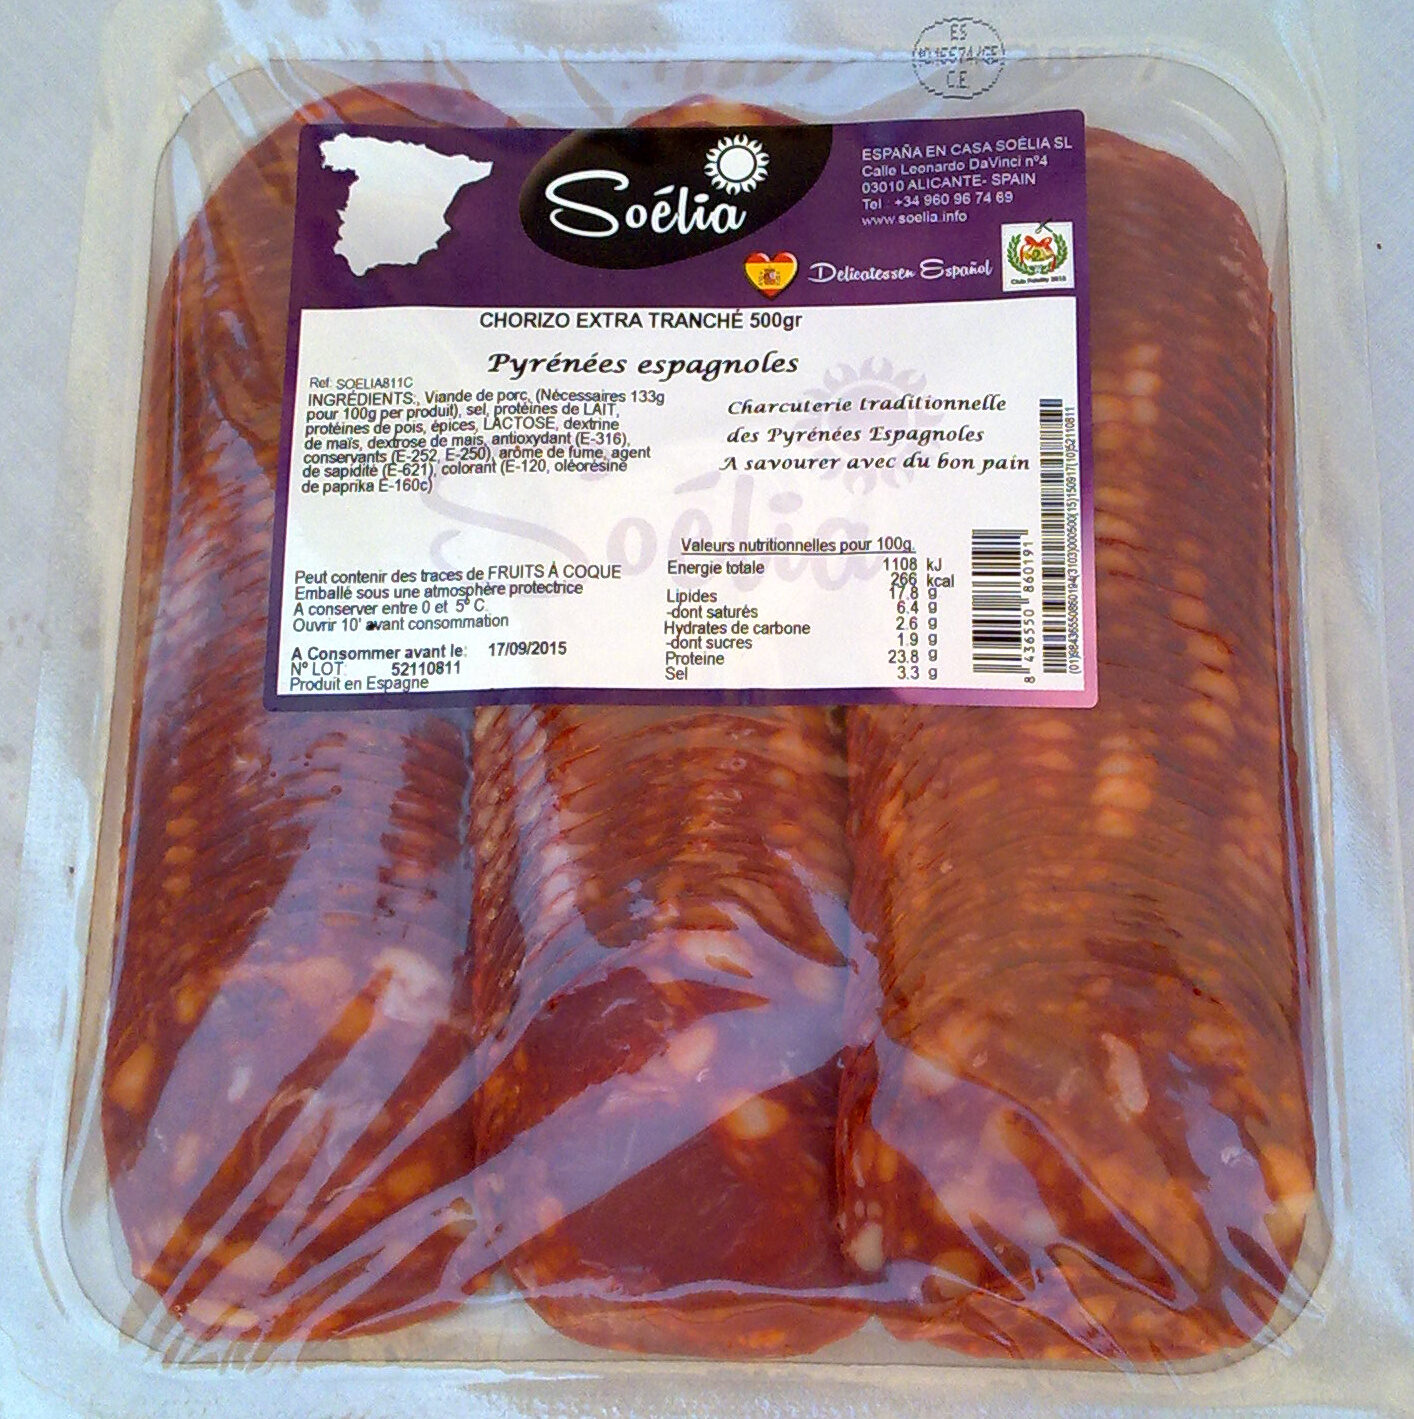 Chorizo extra tranché 500gr - Pyrénées espagnoles - Soélia - Producte - fr